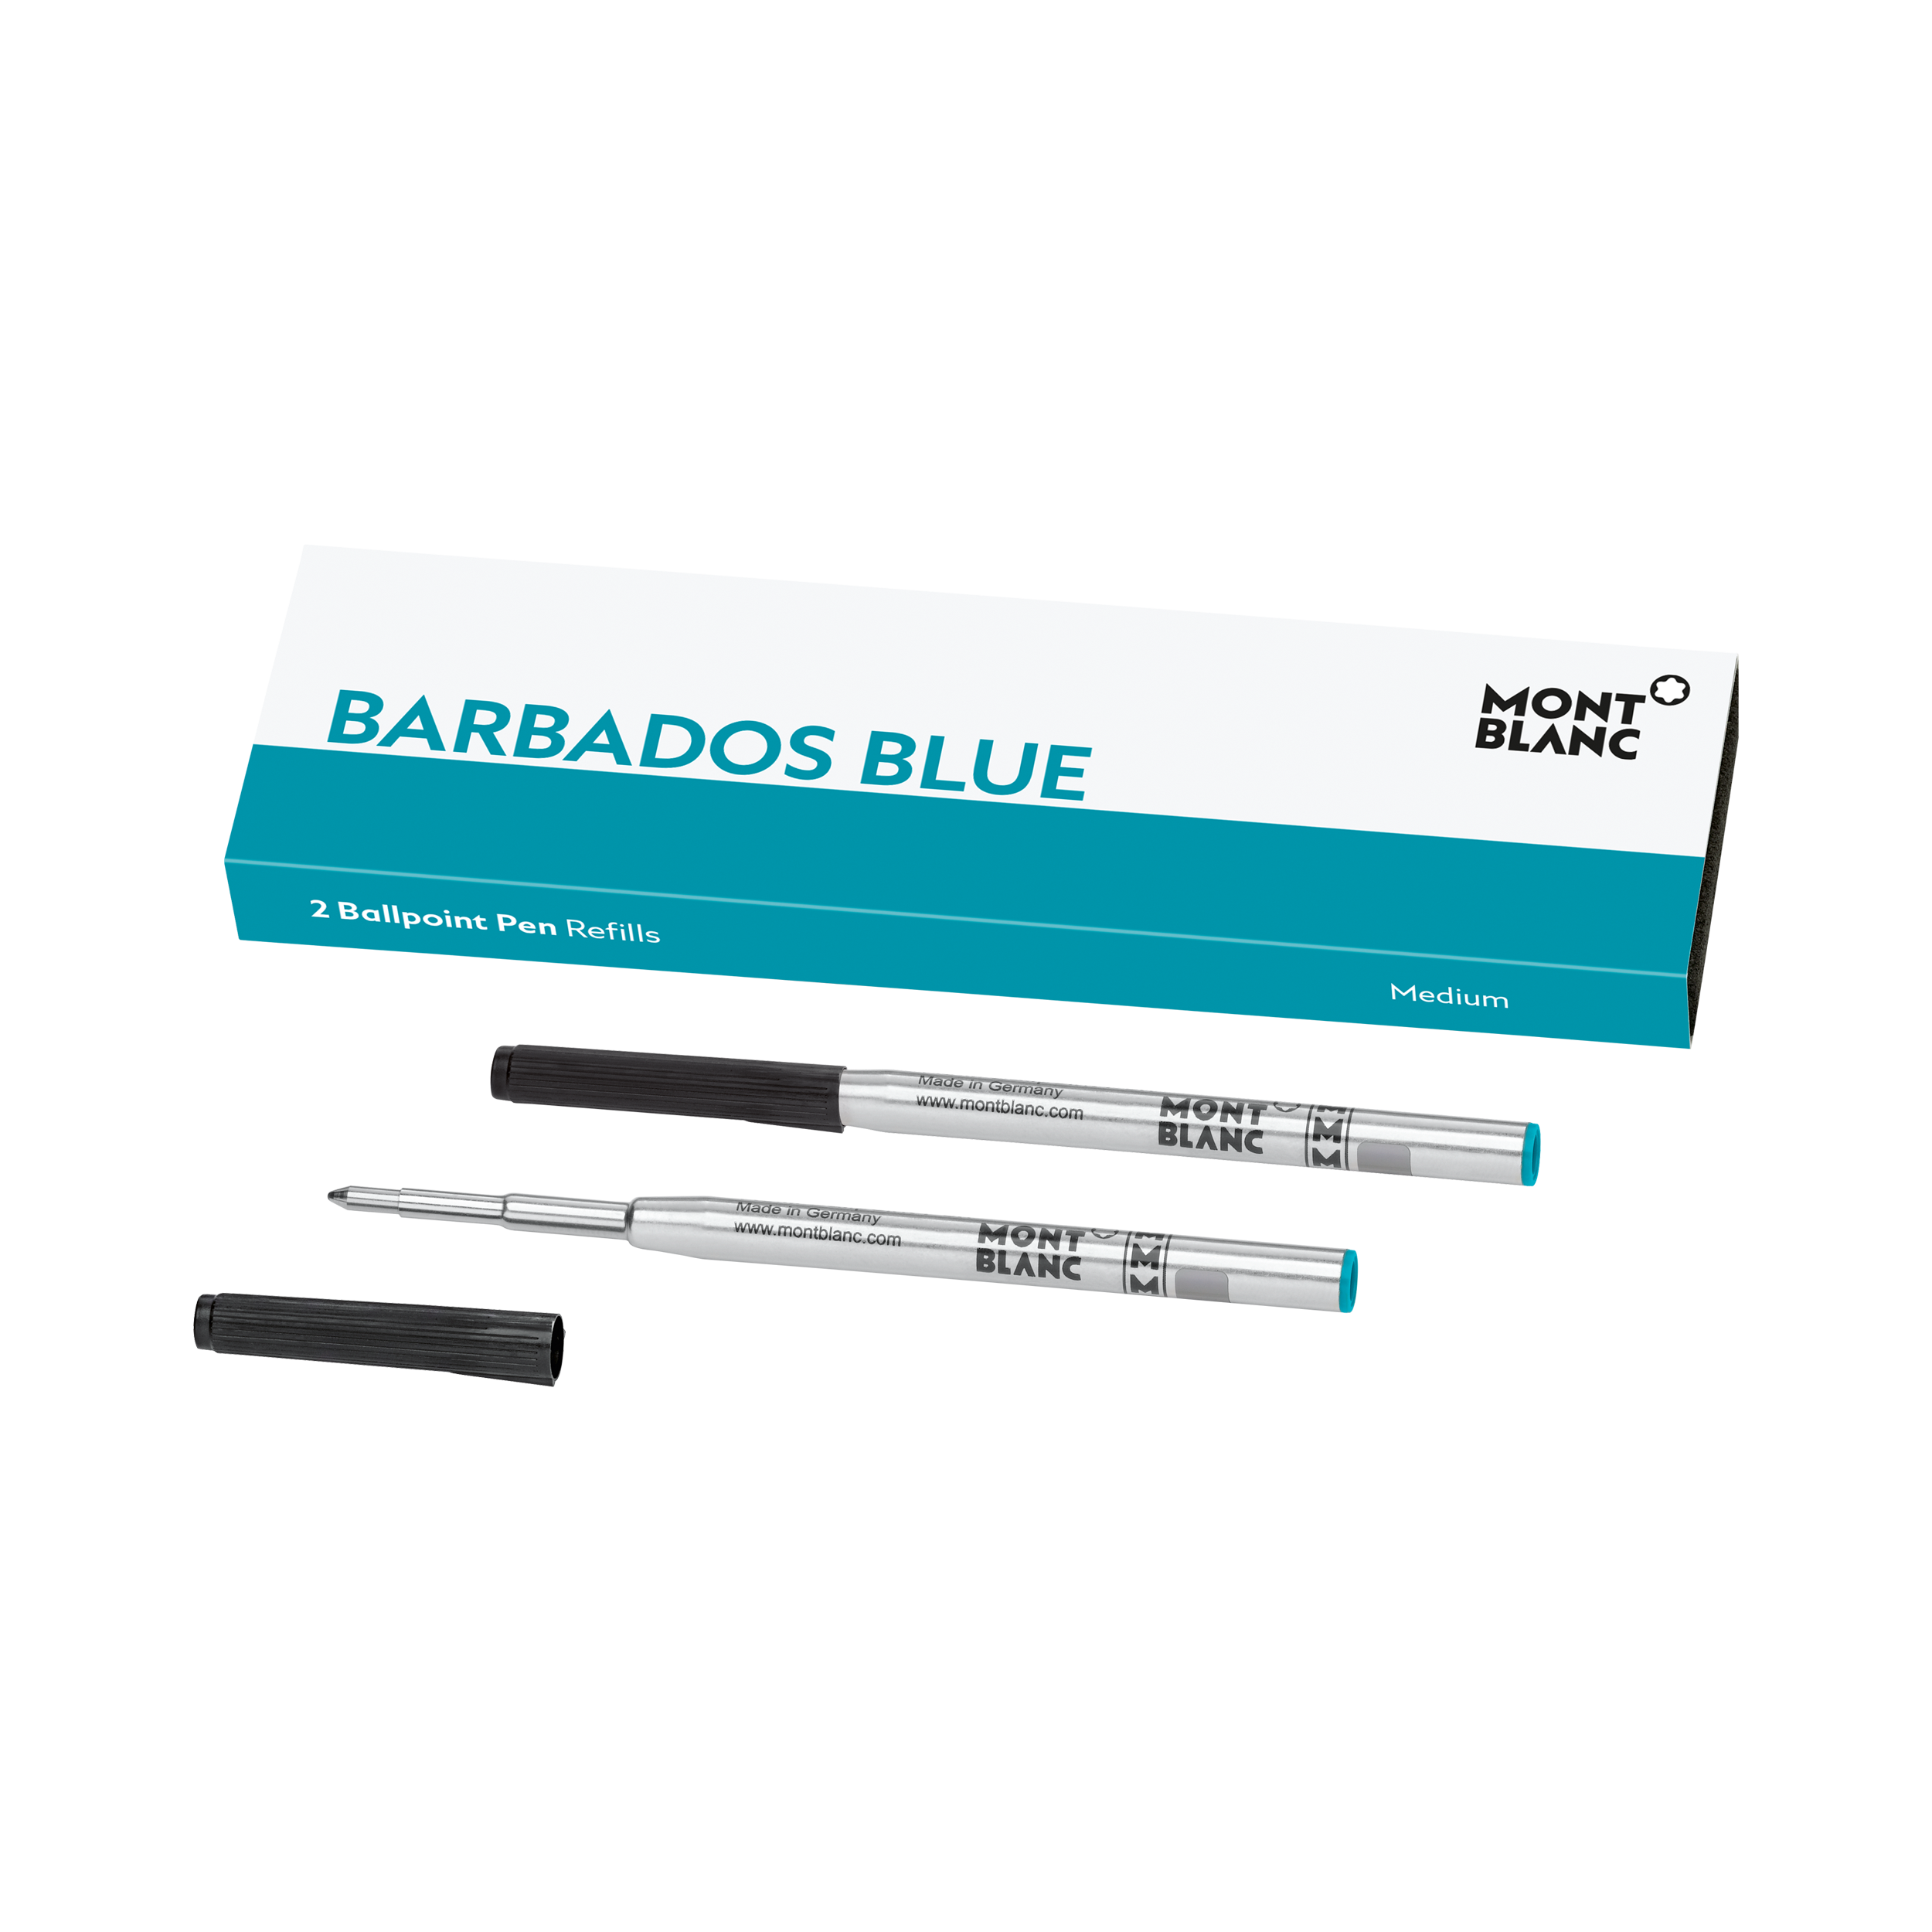 Barbados Blue balpenvullingen * Montblanc 